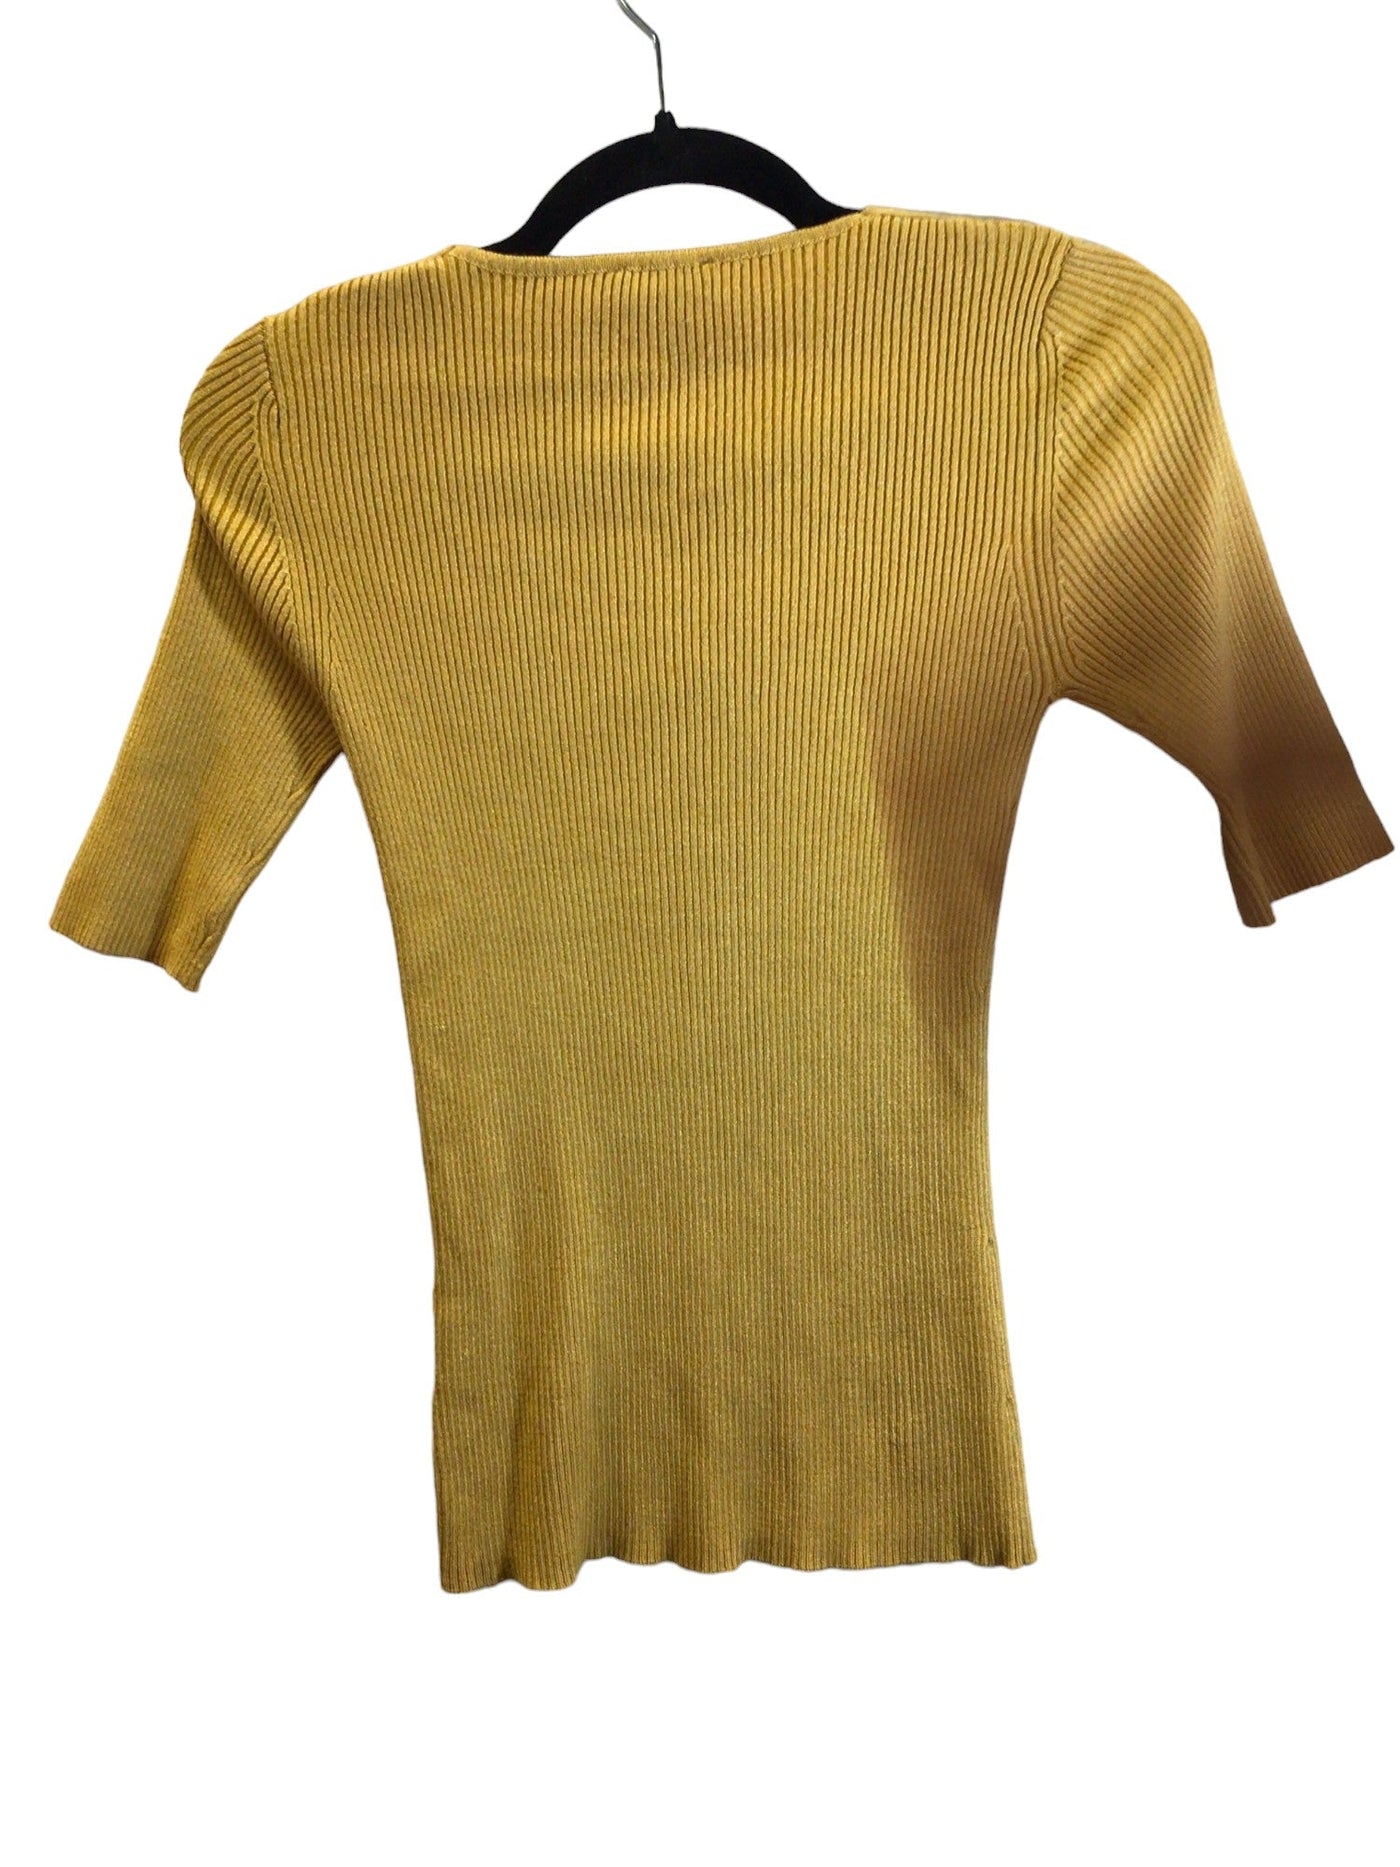 CHATEAU Women Blouses Regular fit in Yellow - Size S | 11.25 $ KOOP